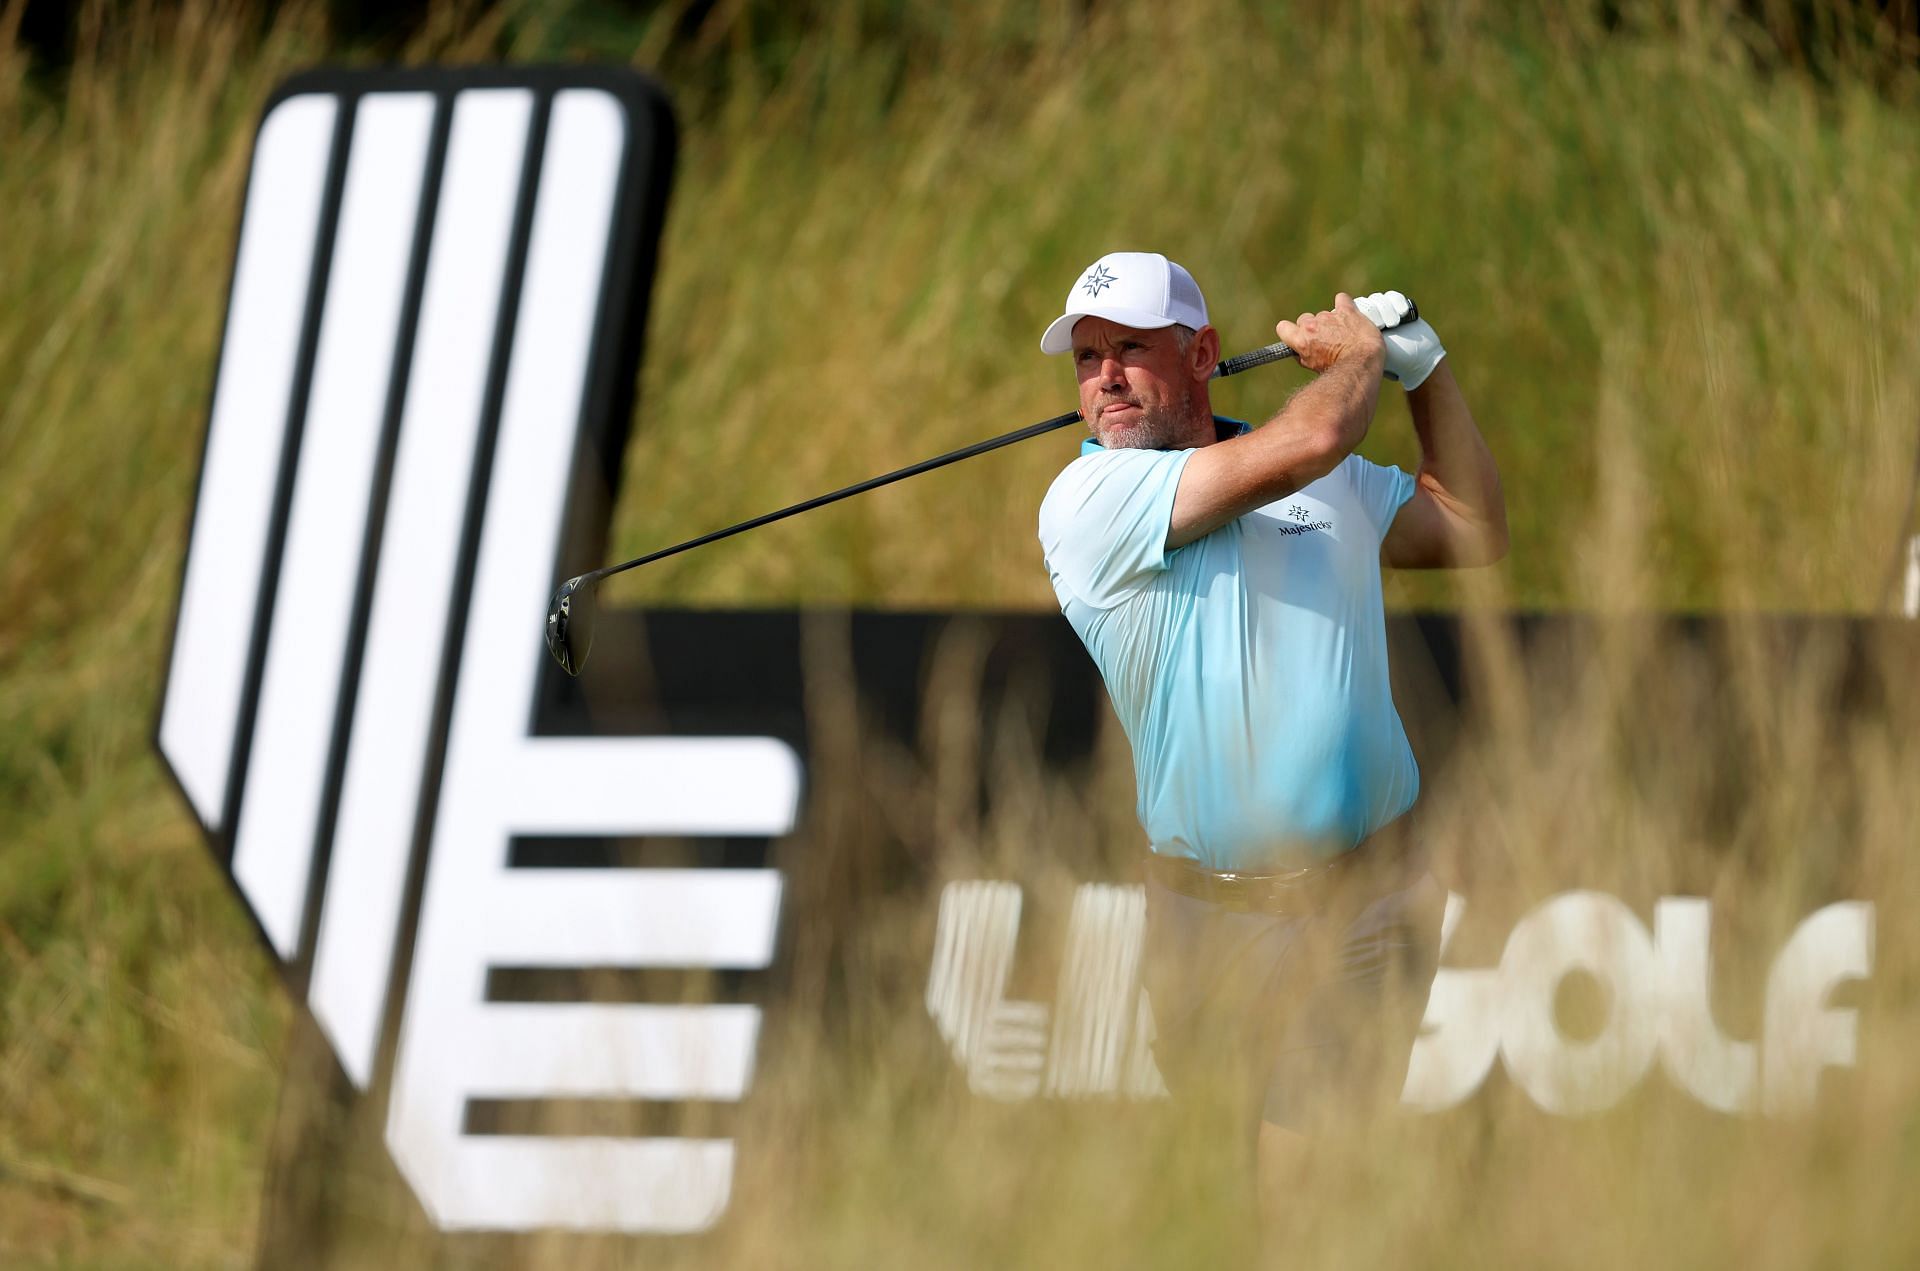 LIV golfer Lee Westwood (Image via Getty)